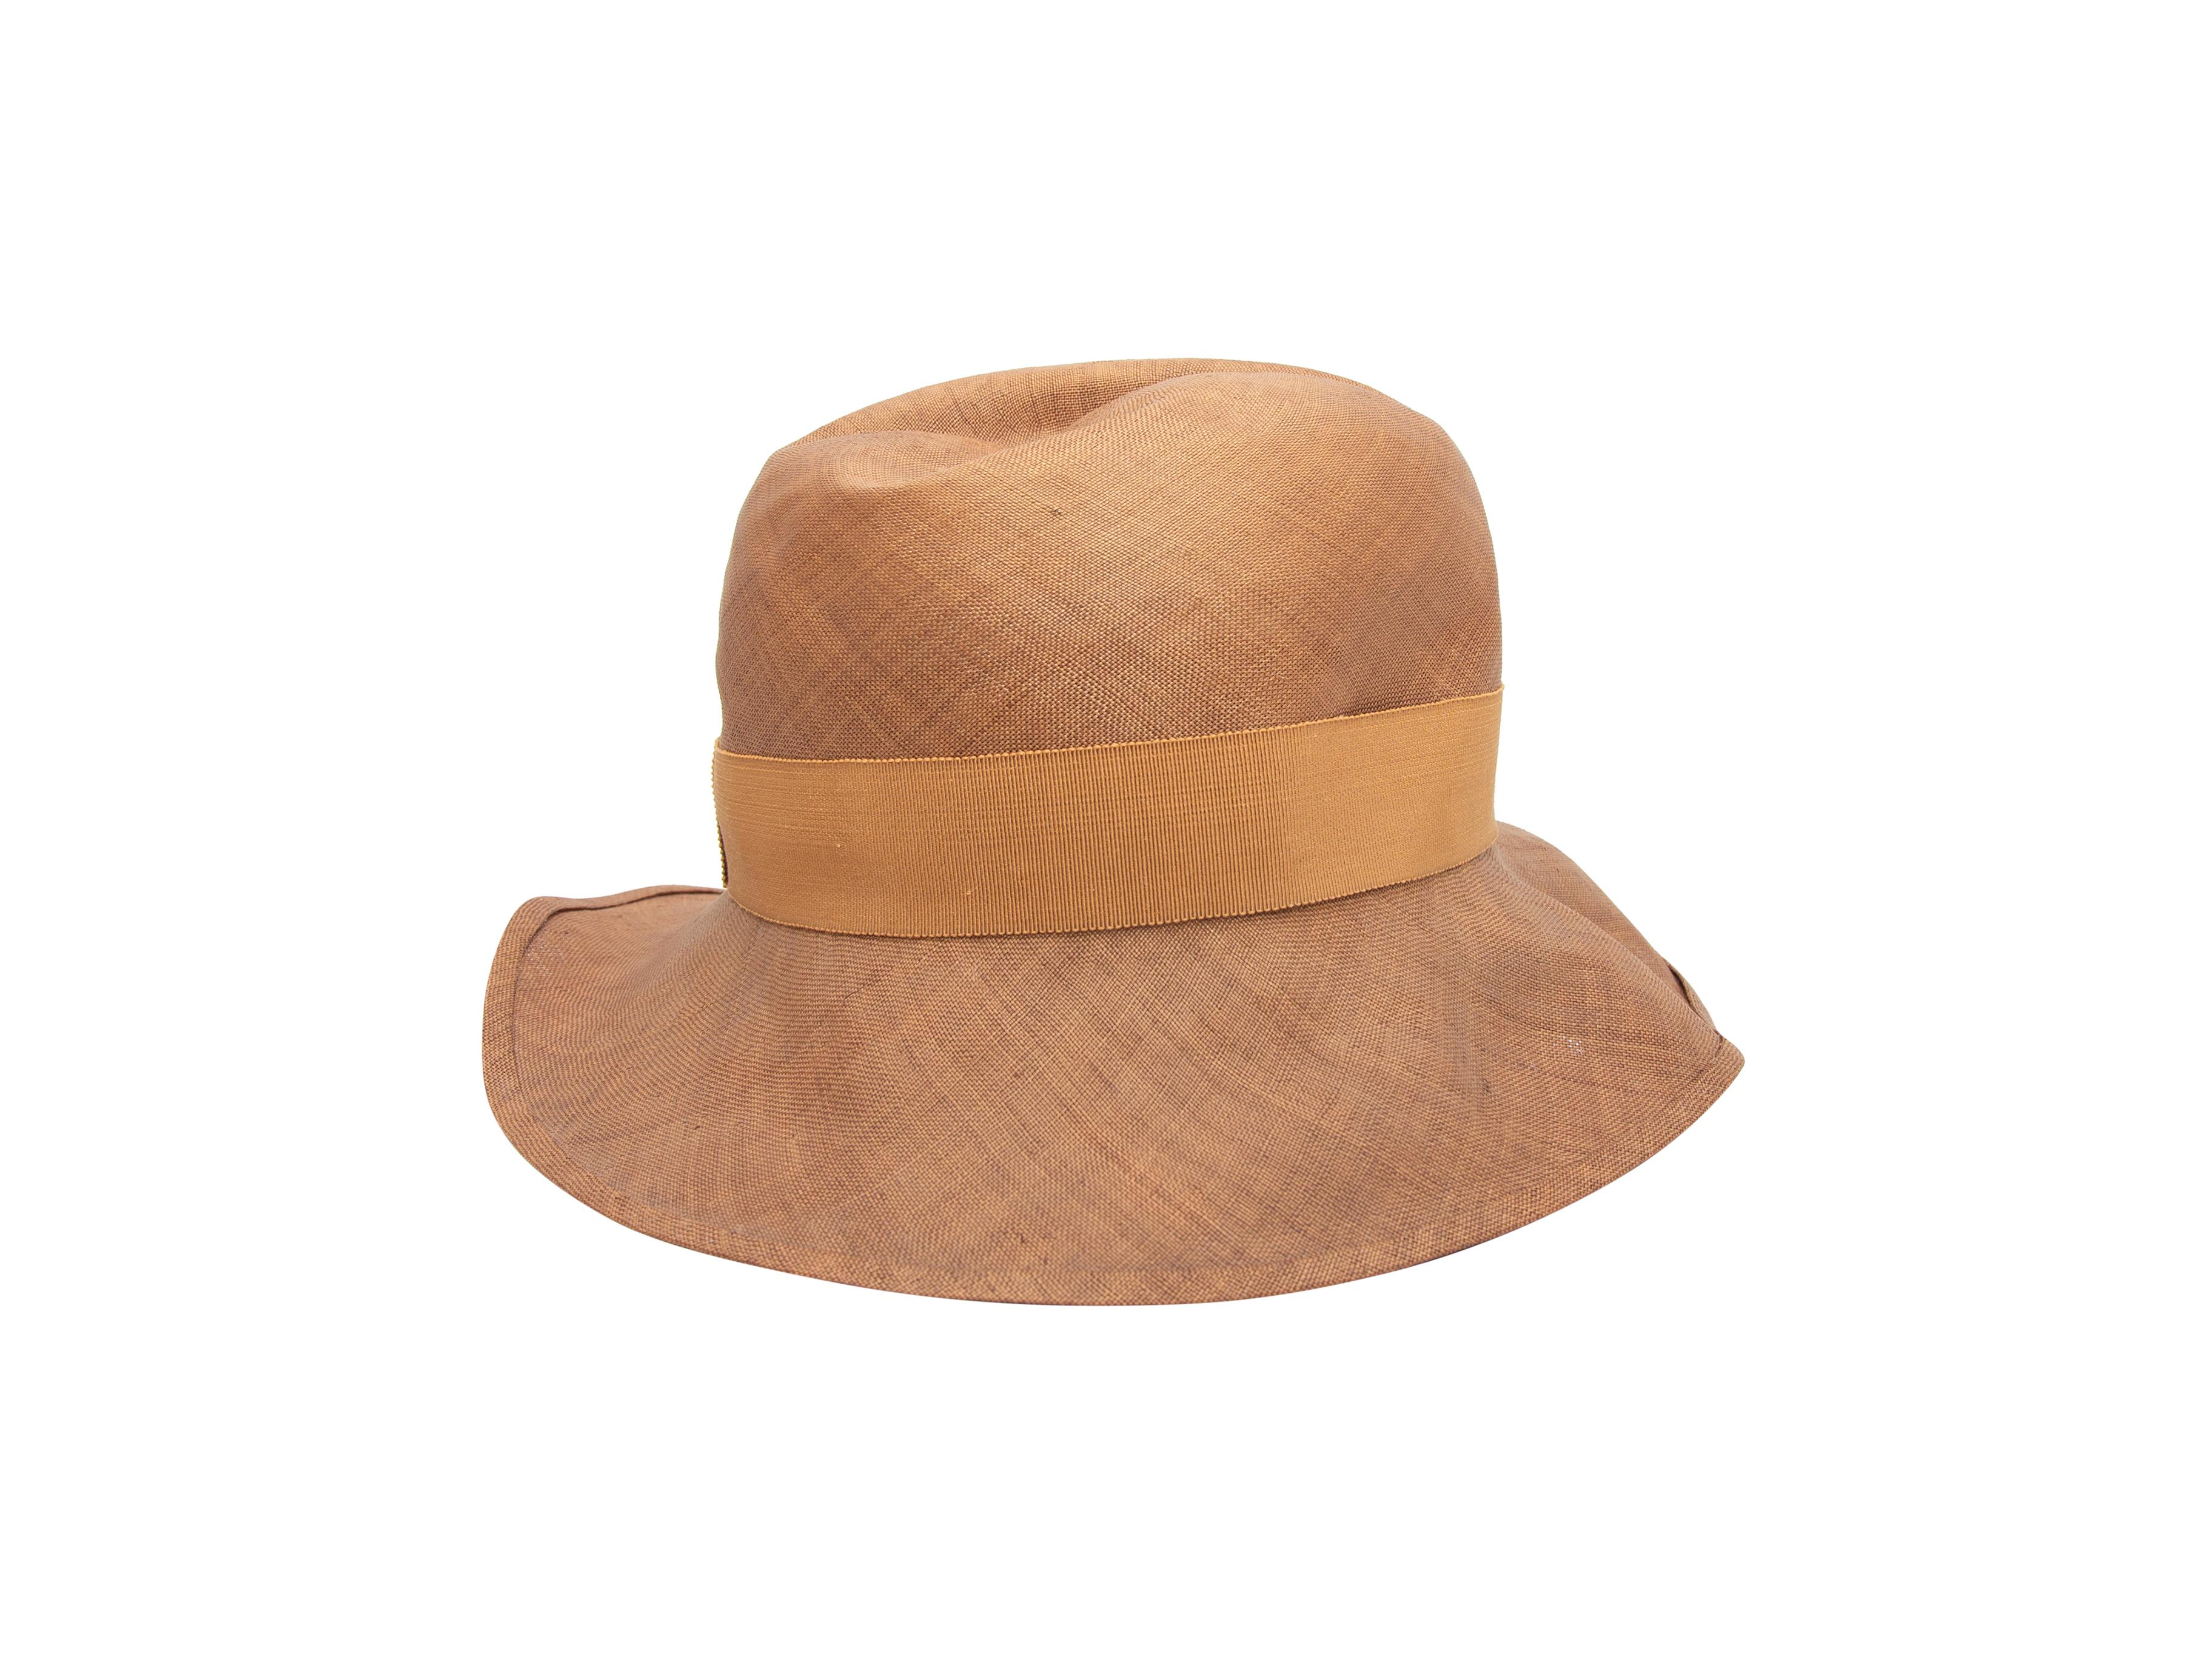 Product details: Vintage tan straw wide brim hat by Chanel. Tonal grosgrain ribbon trim. 5